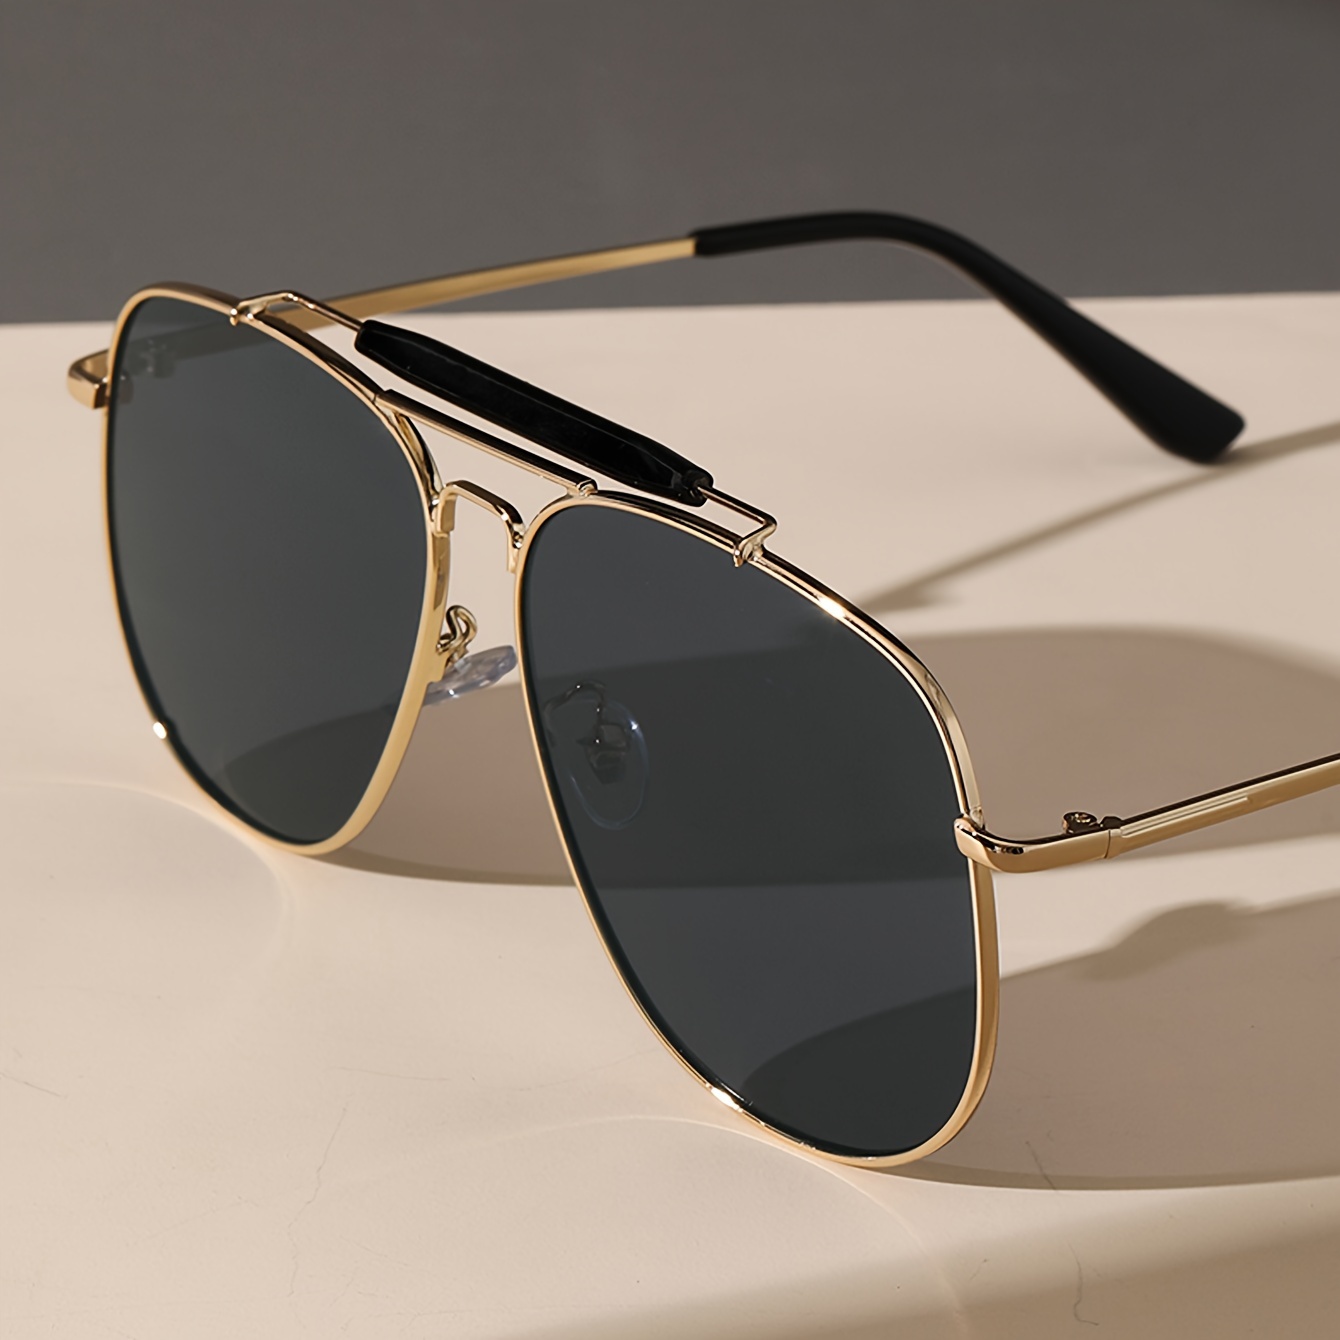 

Fashion Glasses For Men Anti Glare Sunshades Decorative Eyeglasses For Driving Travel